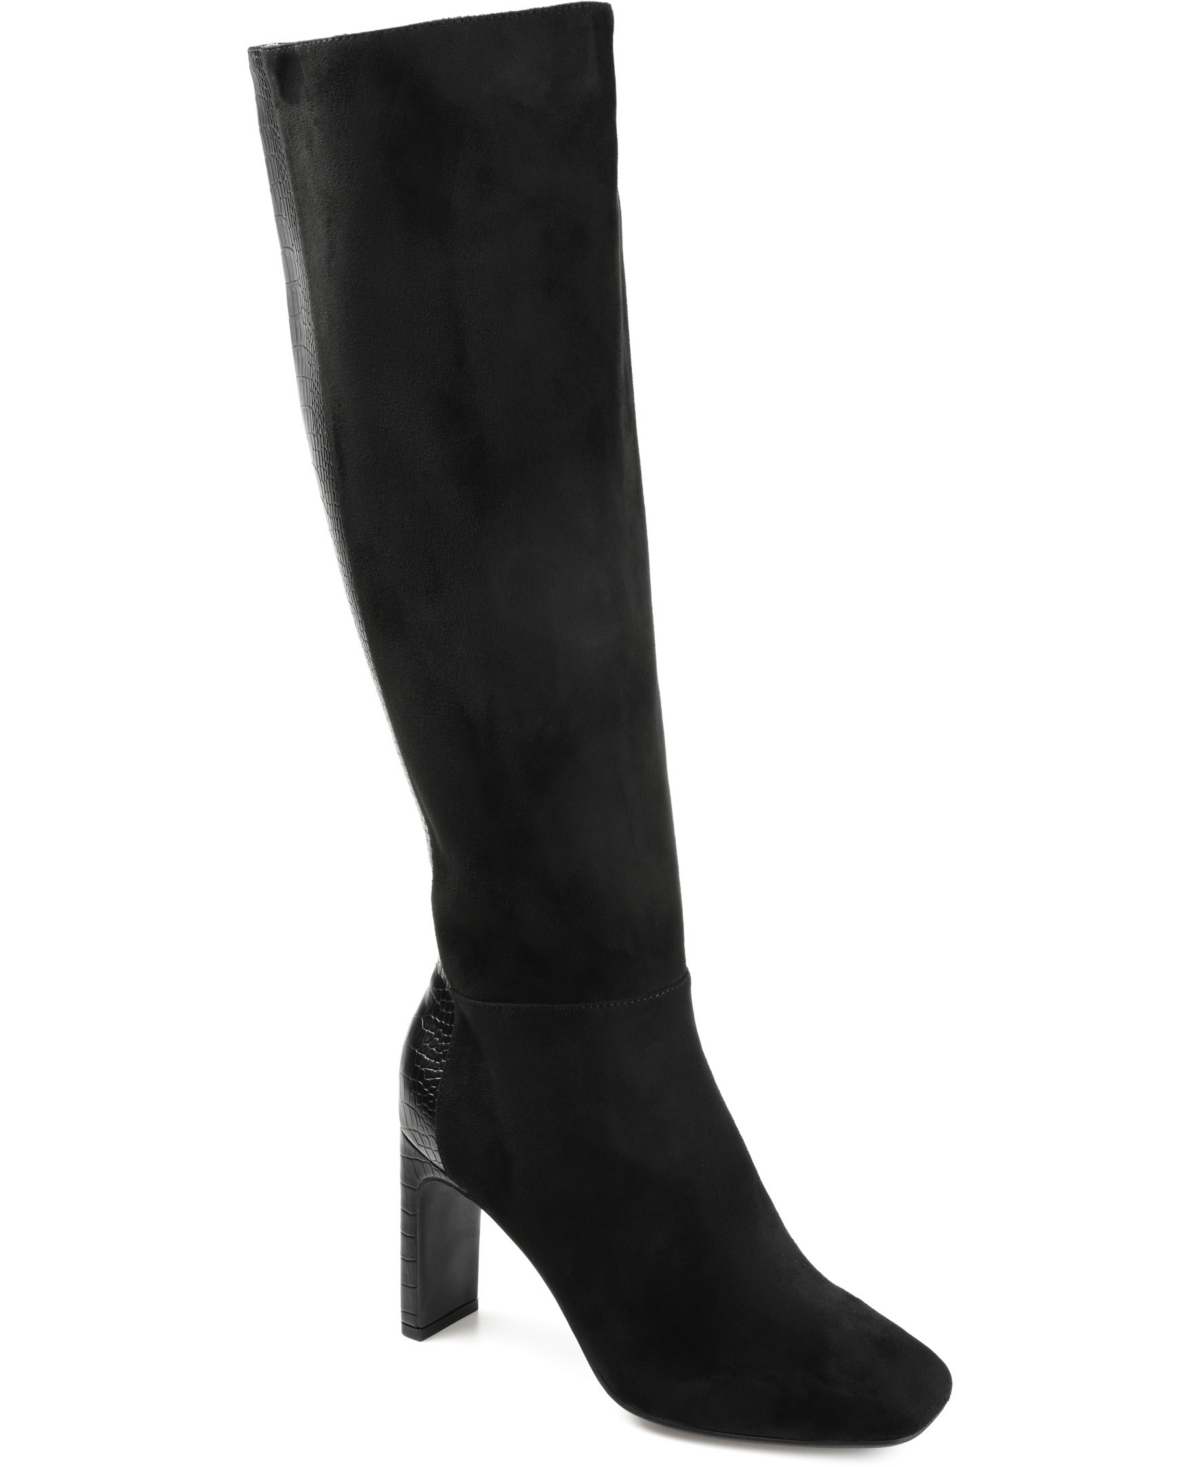 Women's Elisabeth Extra Wide Calf Knee High Boots - Tan